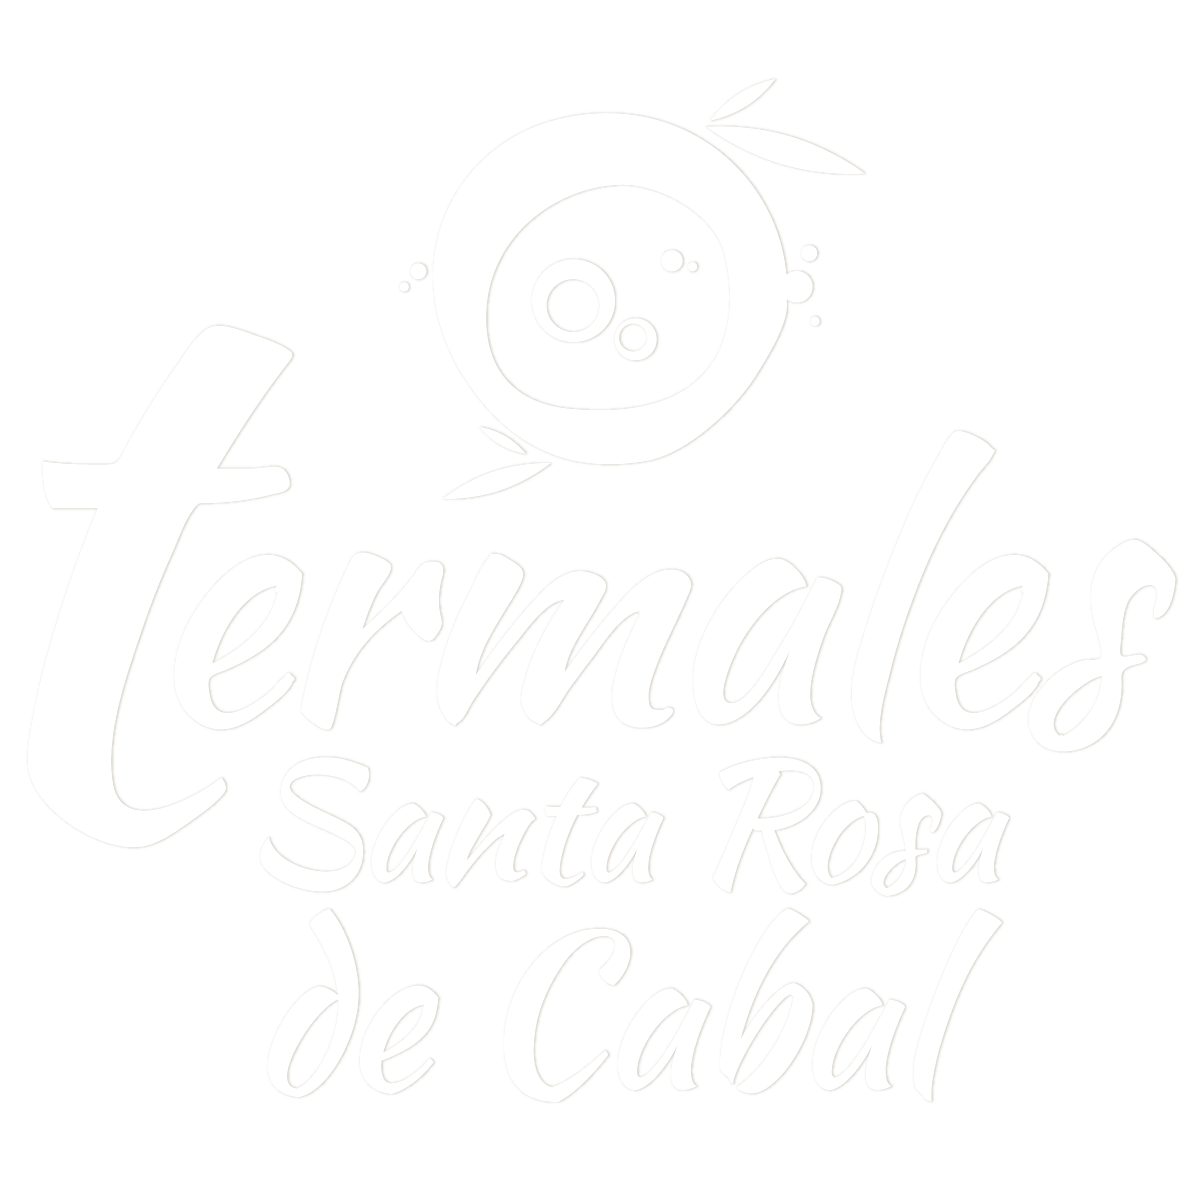 Termales Santa Rosa de Cabal\ title=